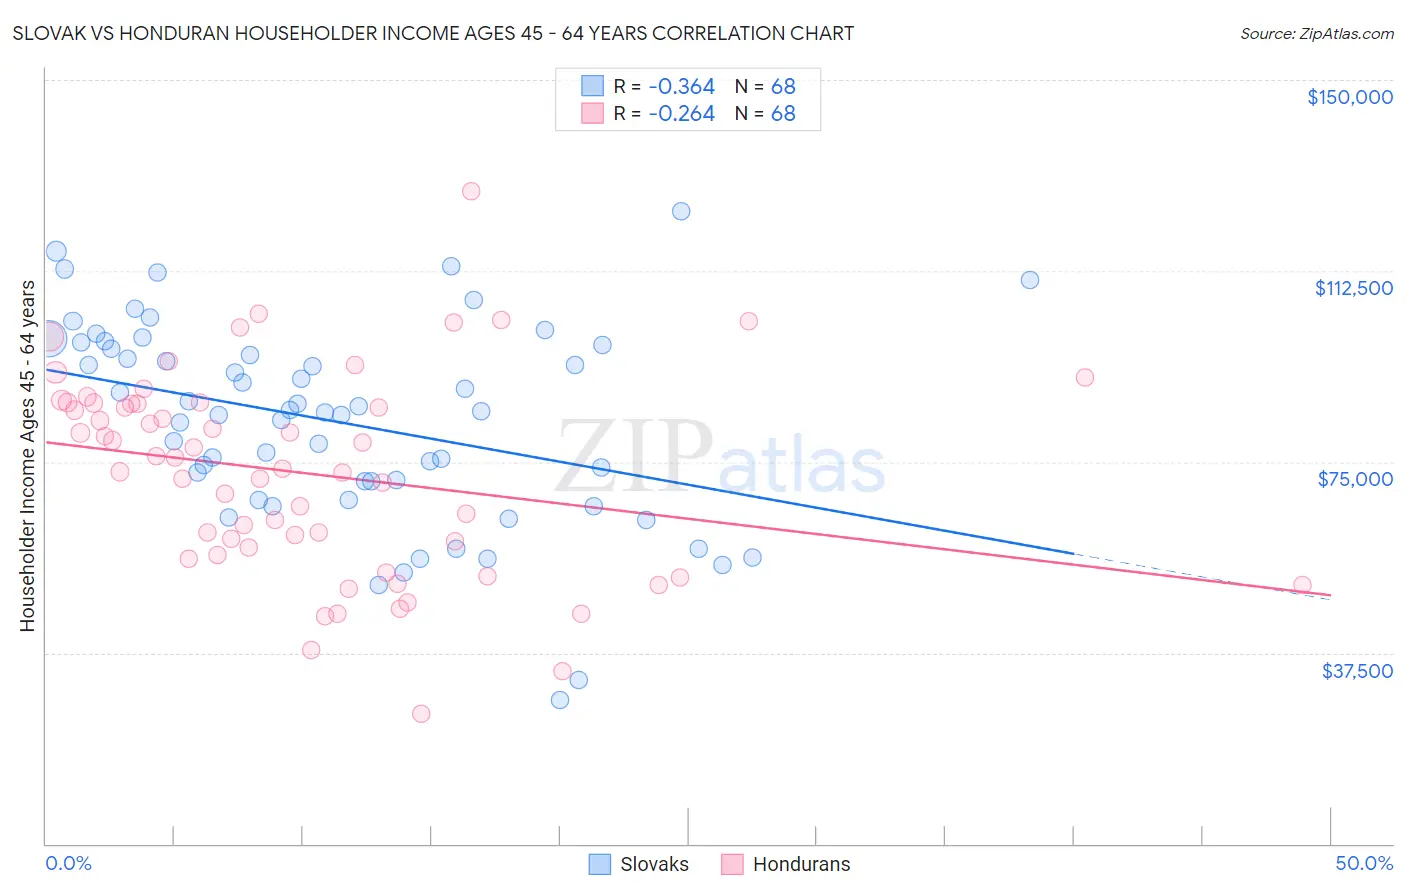 Slovak vs Honduran Householder Income Ages 45 - 64 years